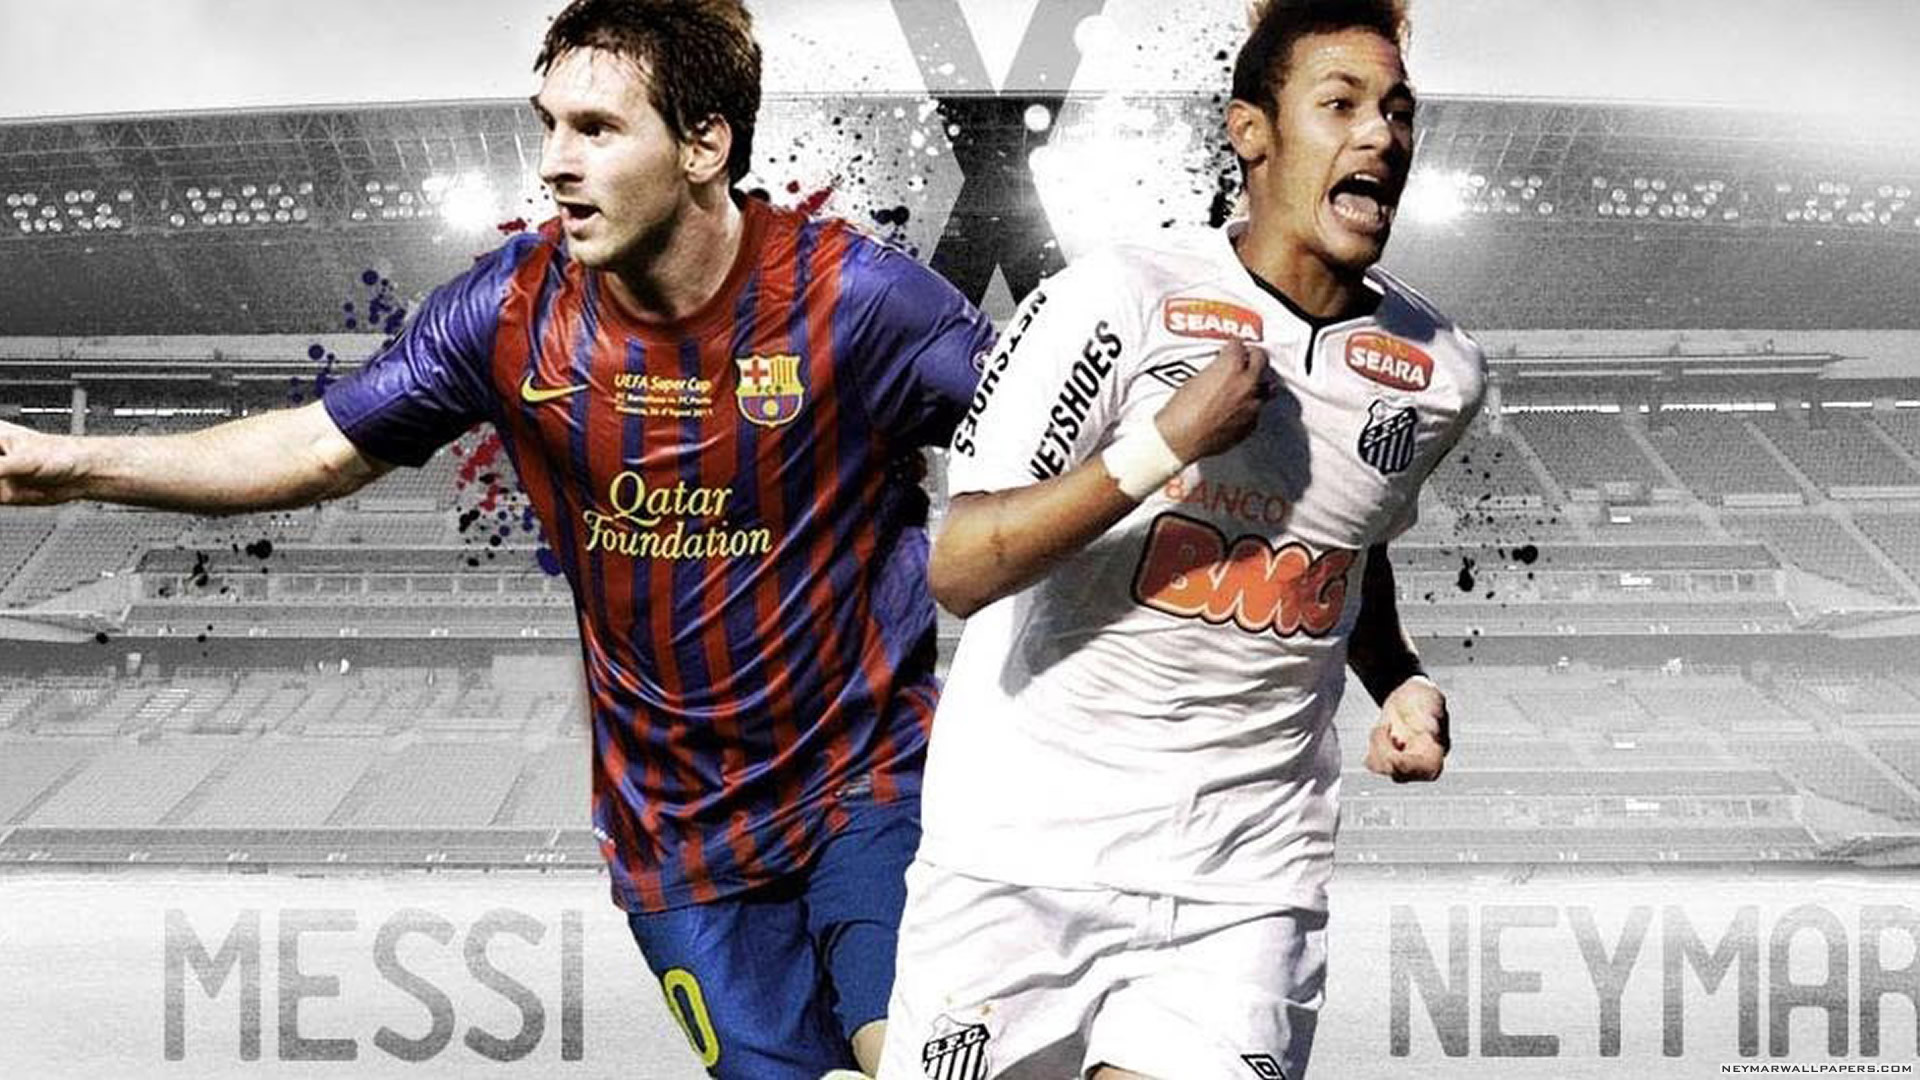 1920x1080 Neymar and Messi wallpaper